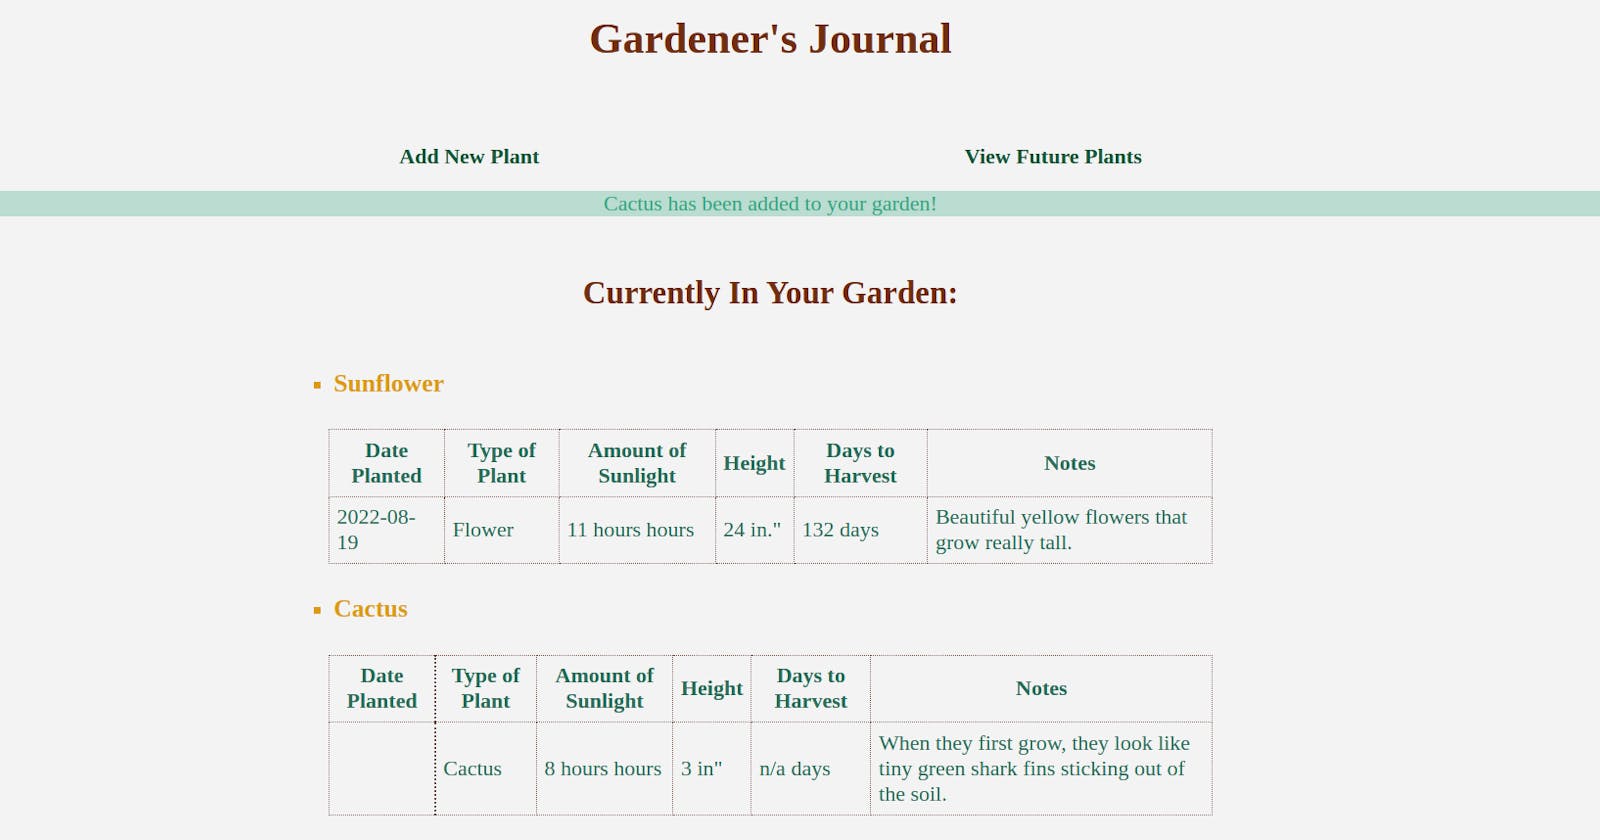 Introducing: Gardener's Journal
My First Web Application!